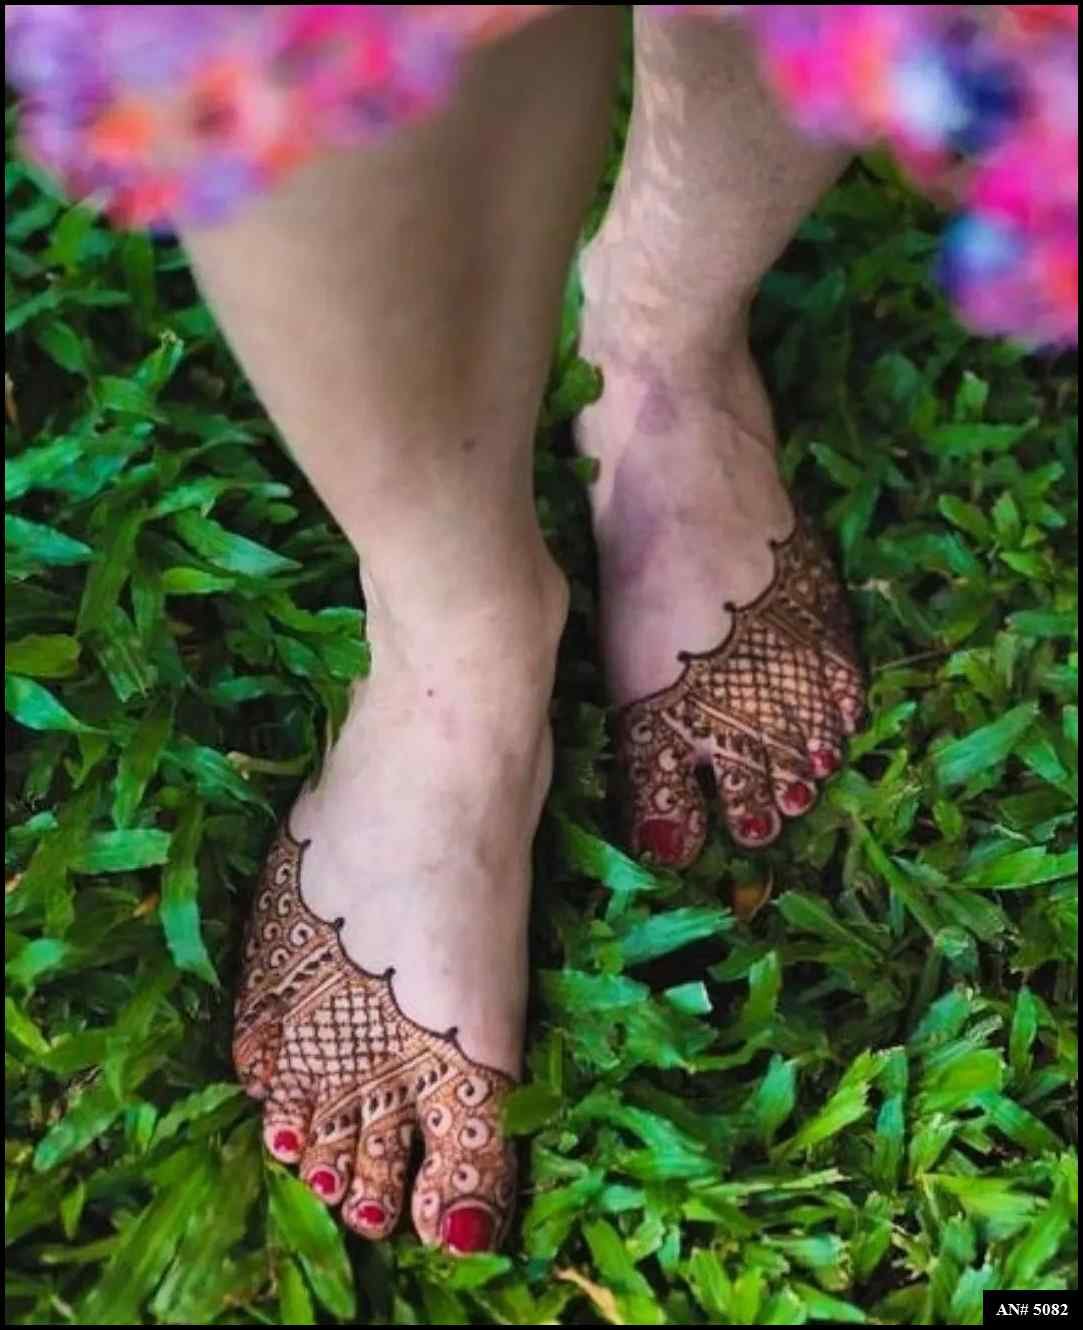 How To Draw Henna Mehndi Design Side BORDER for Feet Tutorial - YouTube